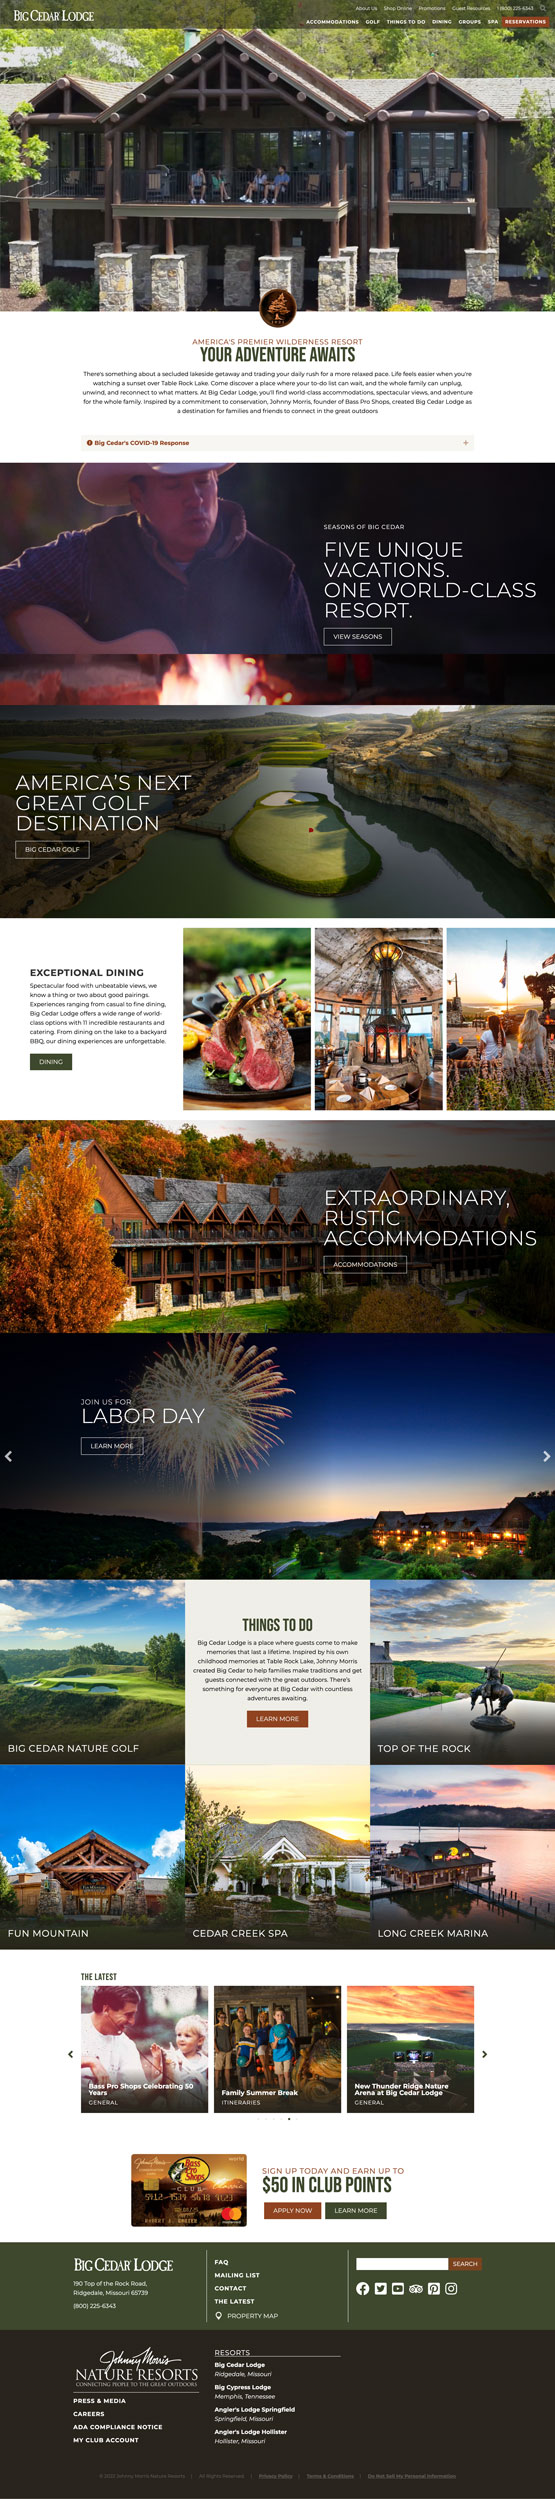 Big Cedar Lodge Homepage